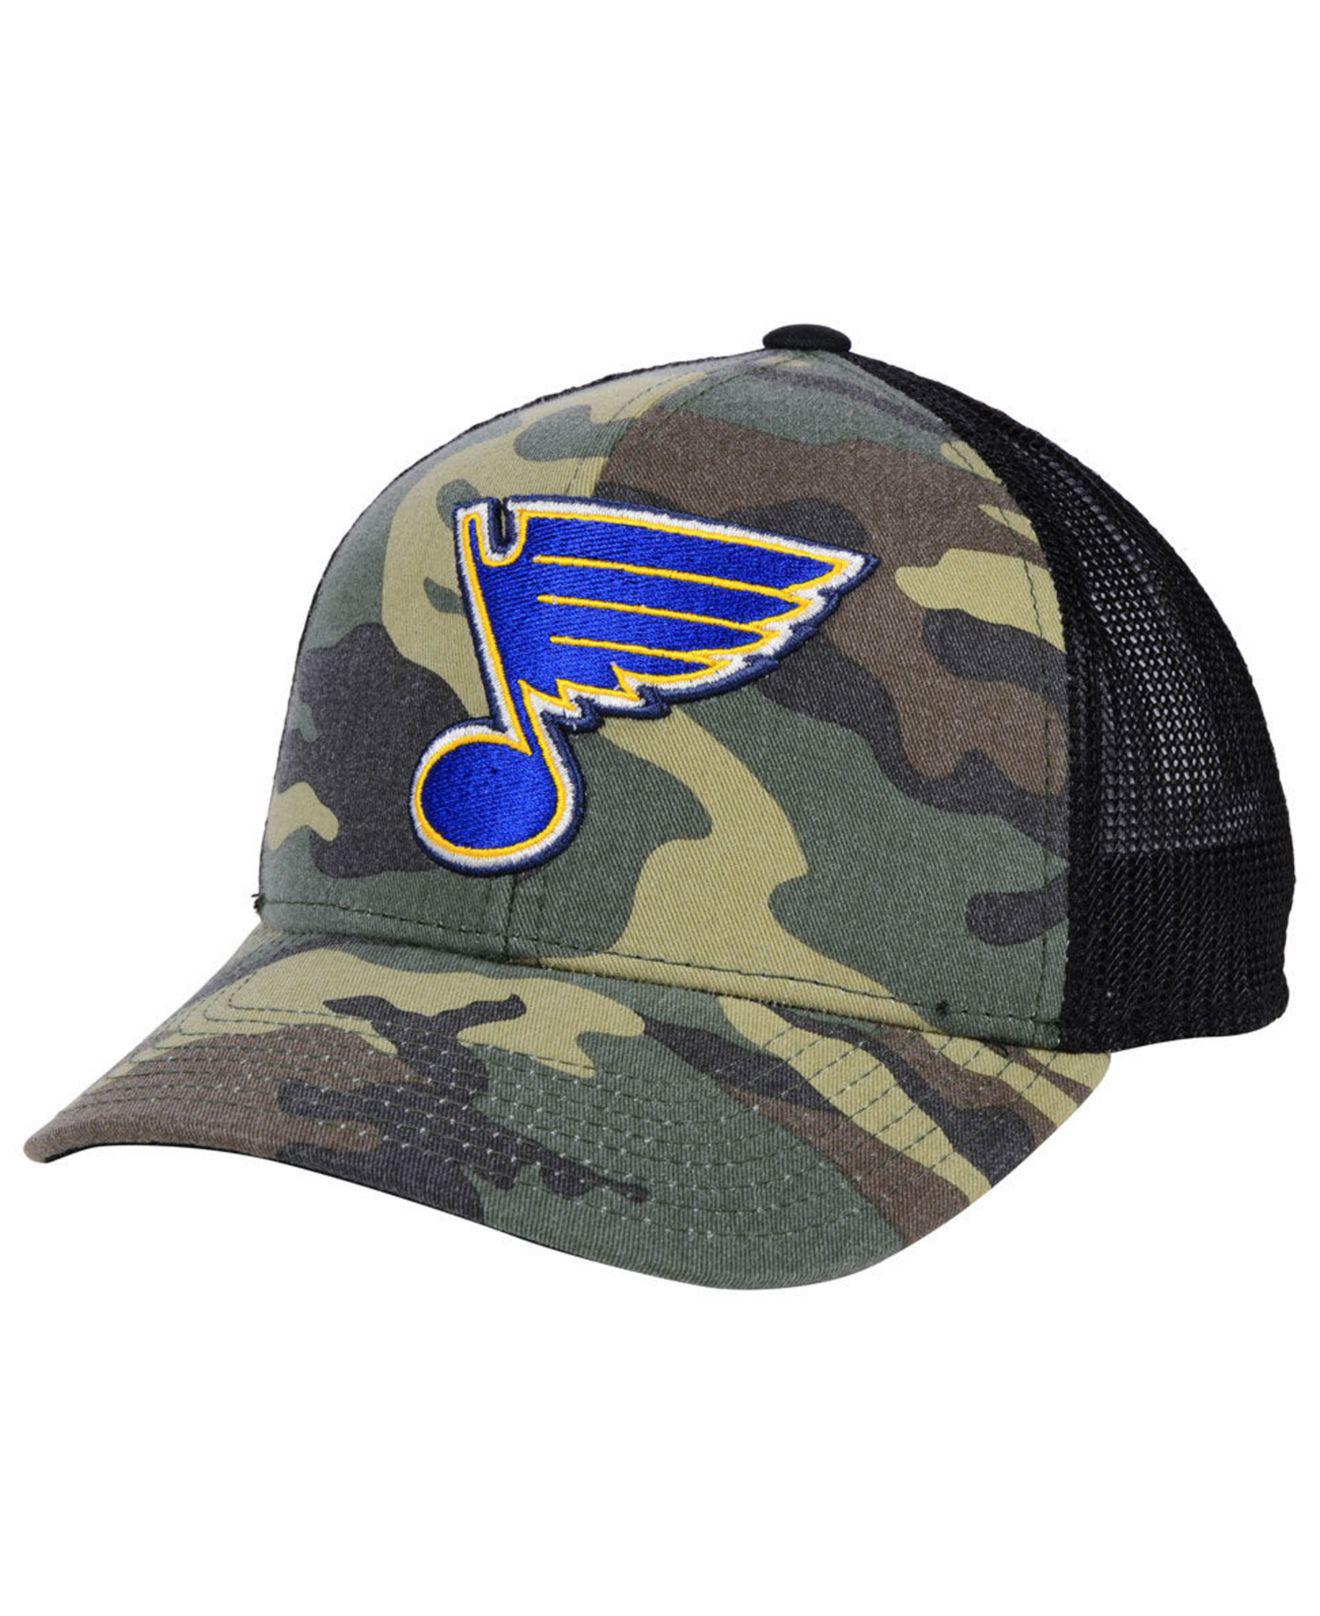 Nashville Predators adidas Military Appreciation Flex Hat - Camo/Black